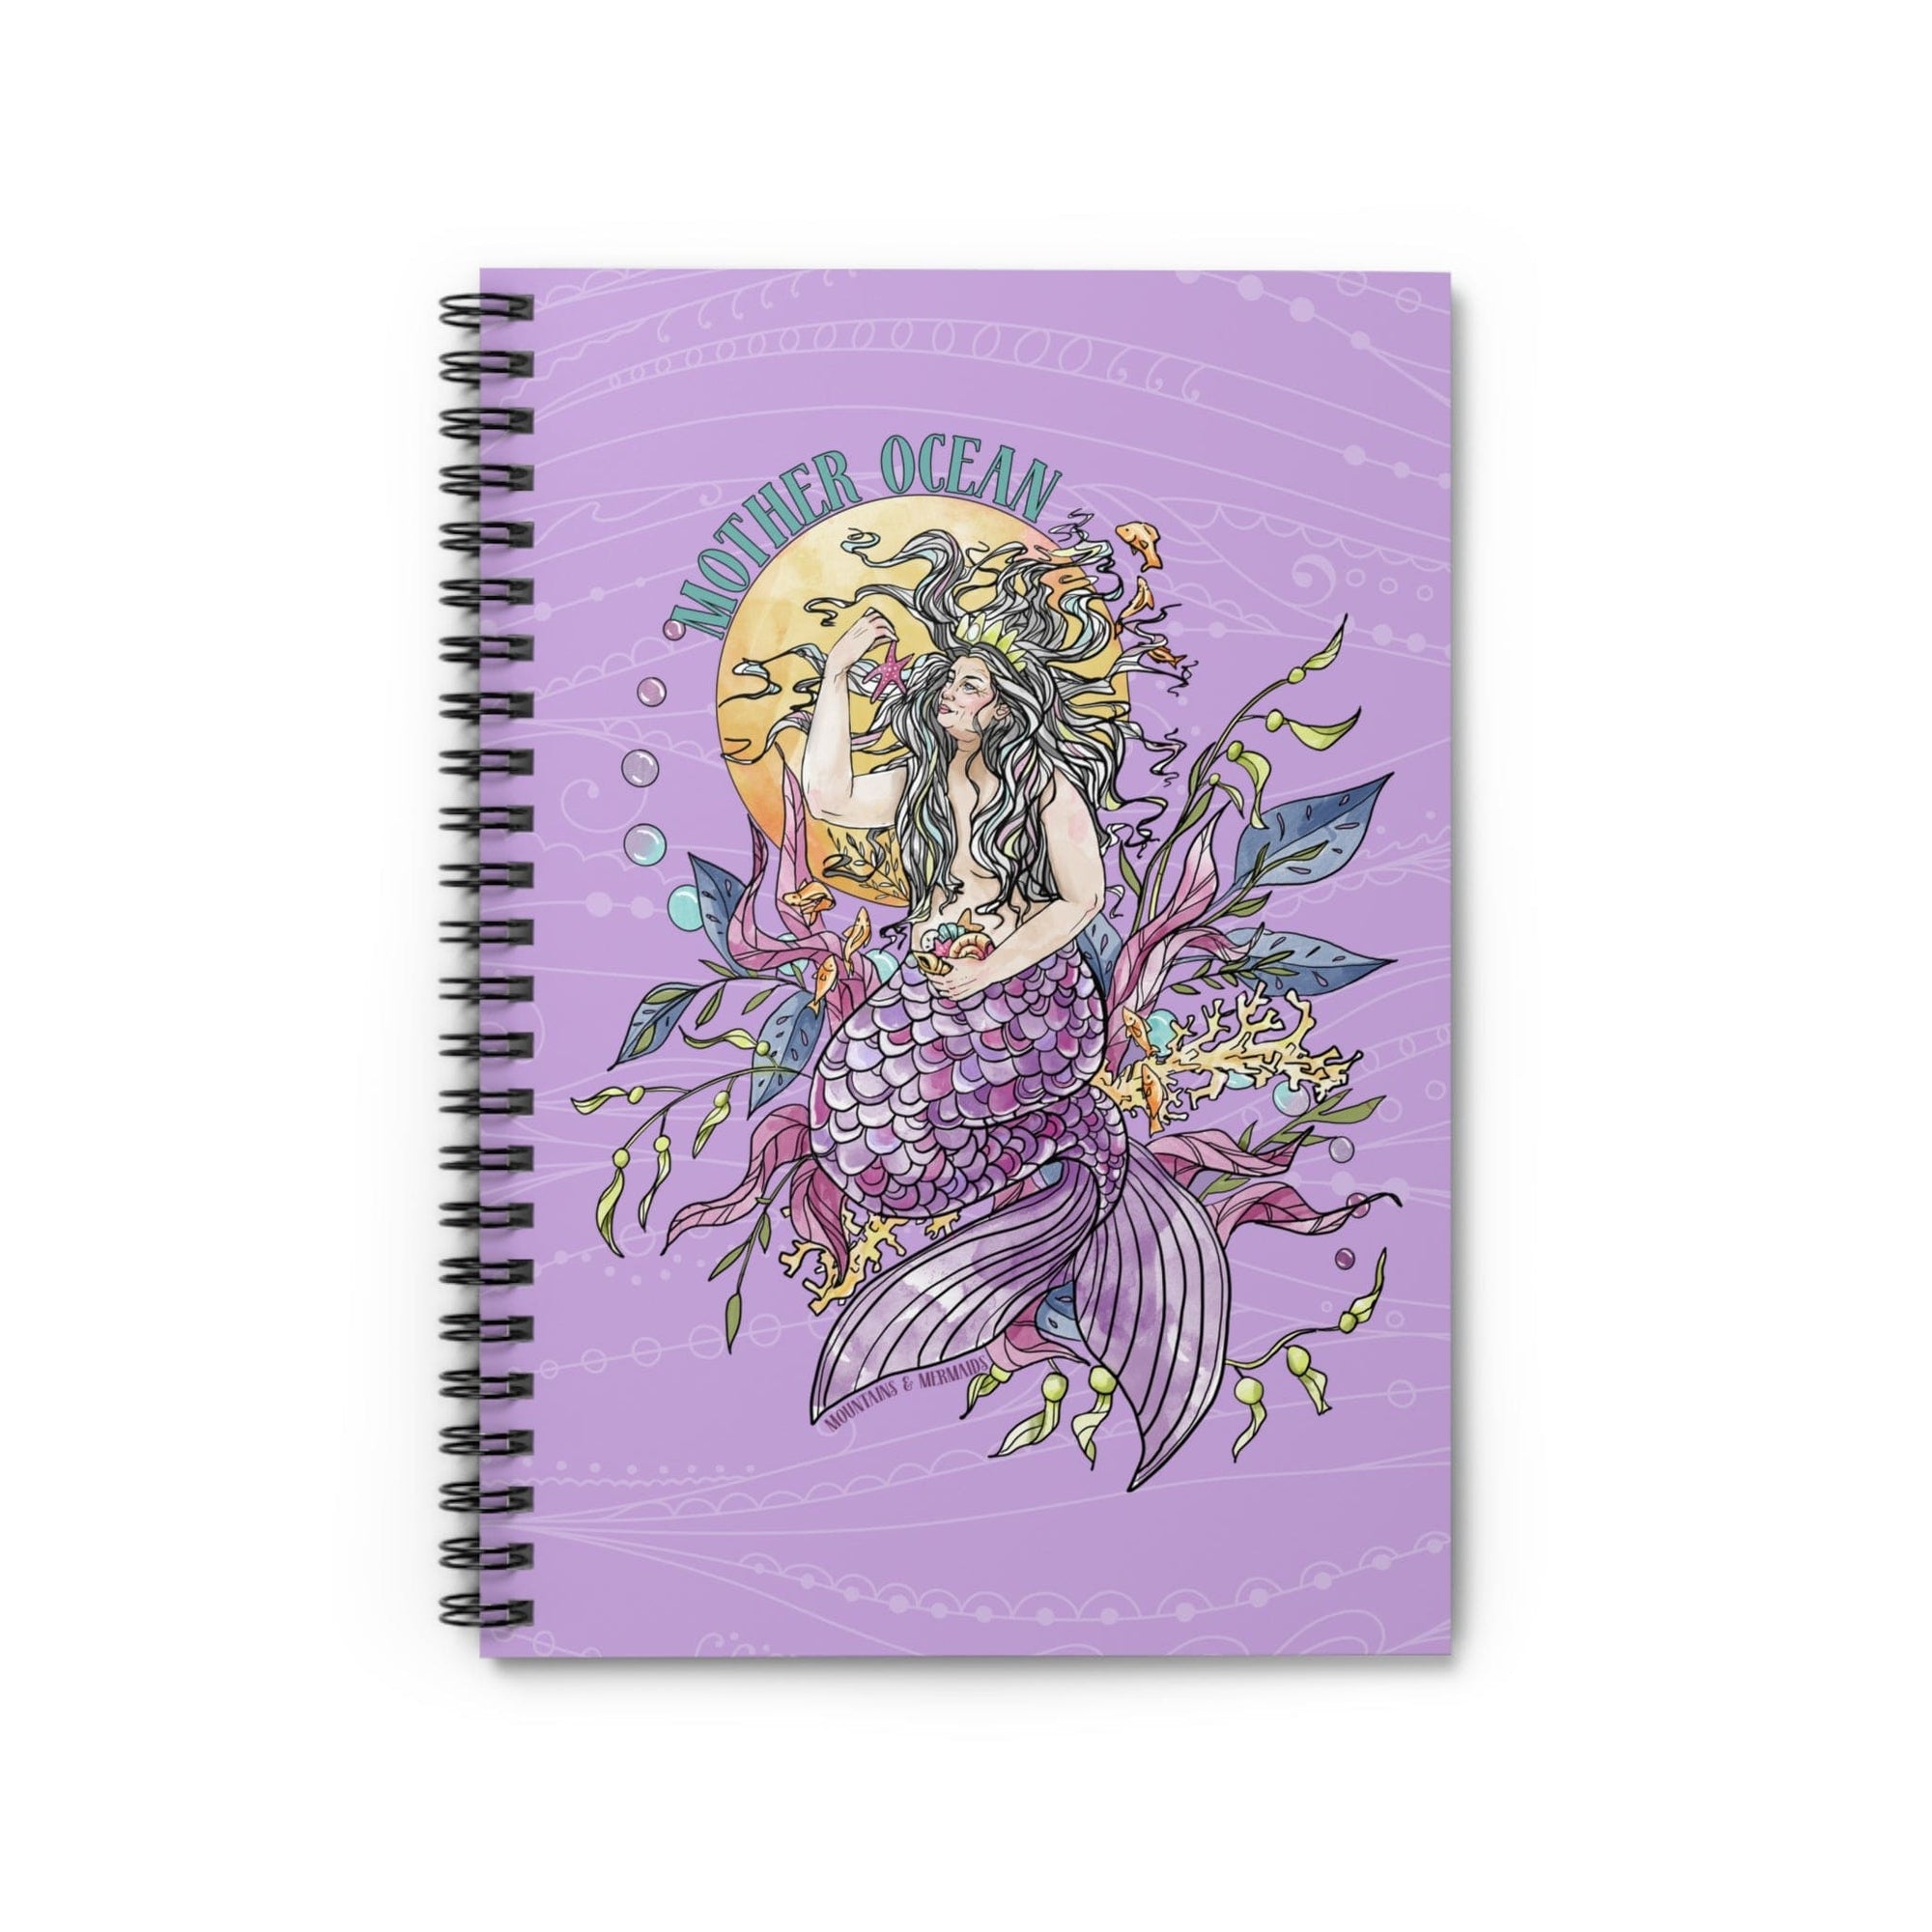 Mother Ocean Purple Spiral Notebook - Ruled Line - Mountains & Mermaids